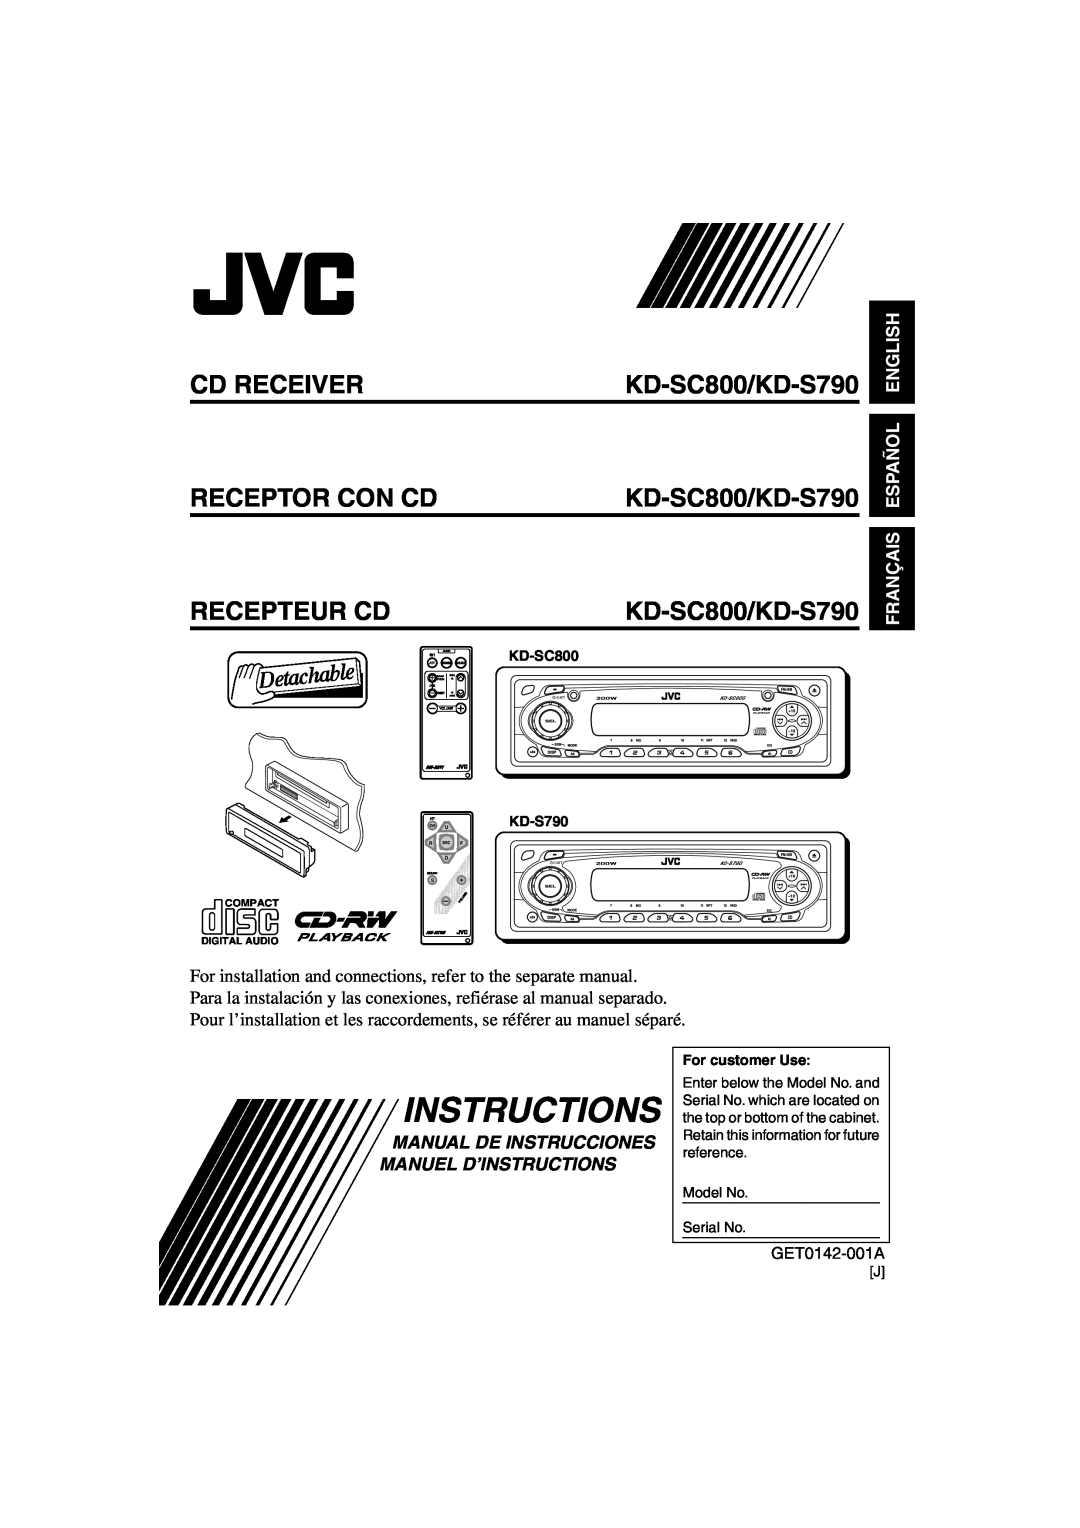 JVC manual Cd Receiver, Receptor Con Cd, Recepteur Cd, KD-SC800/KD-S790, Français Español English, Instructions 